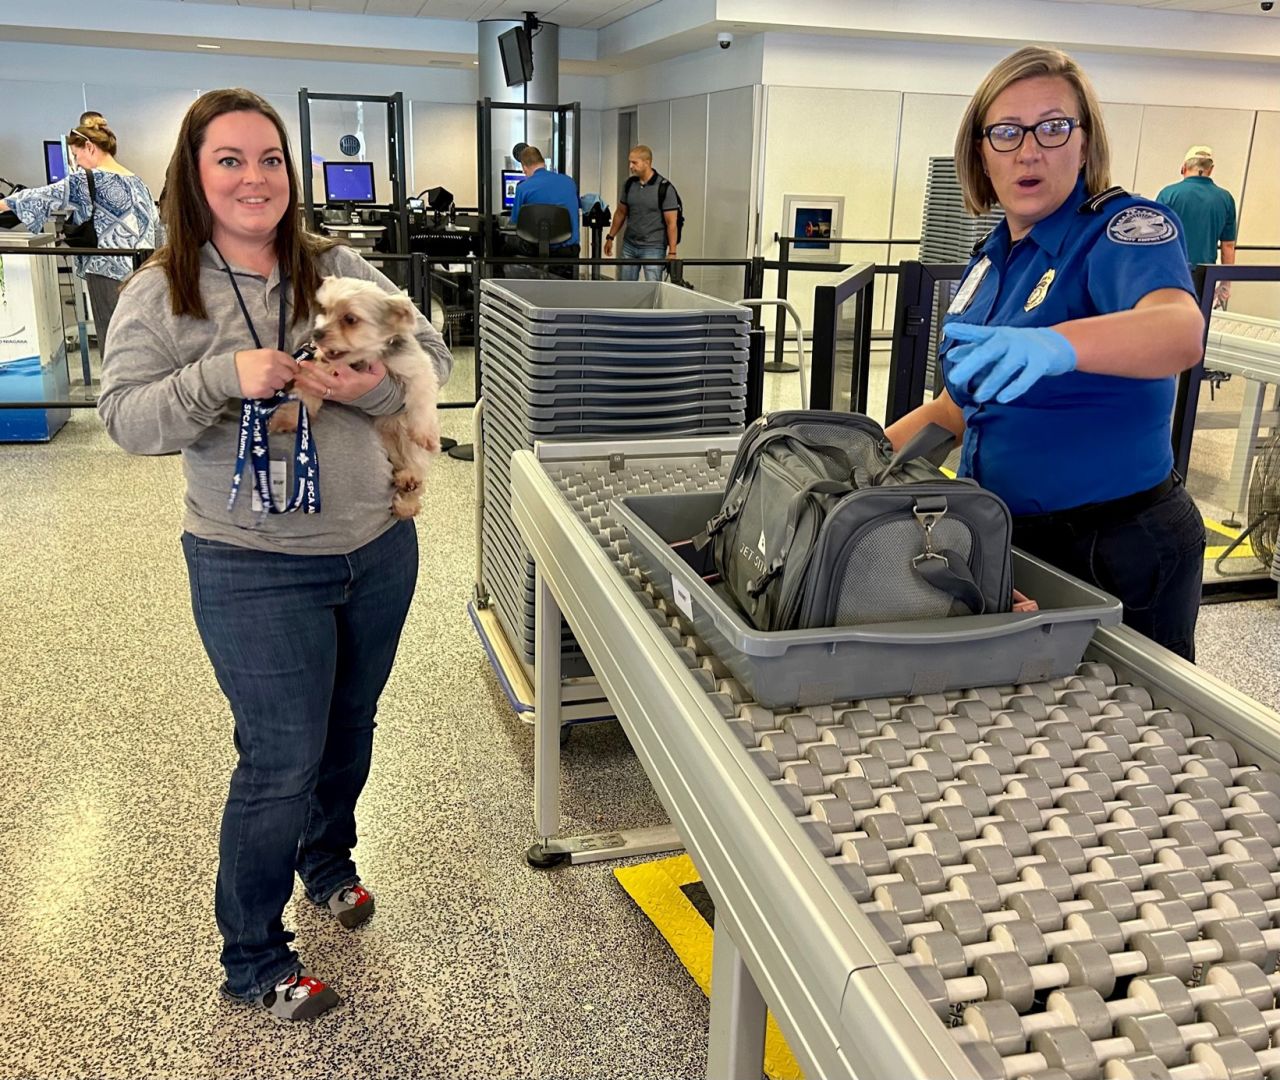 TSA officer performing pet screening demo at Buffalo Niagara International Airport on Sept. 27.